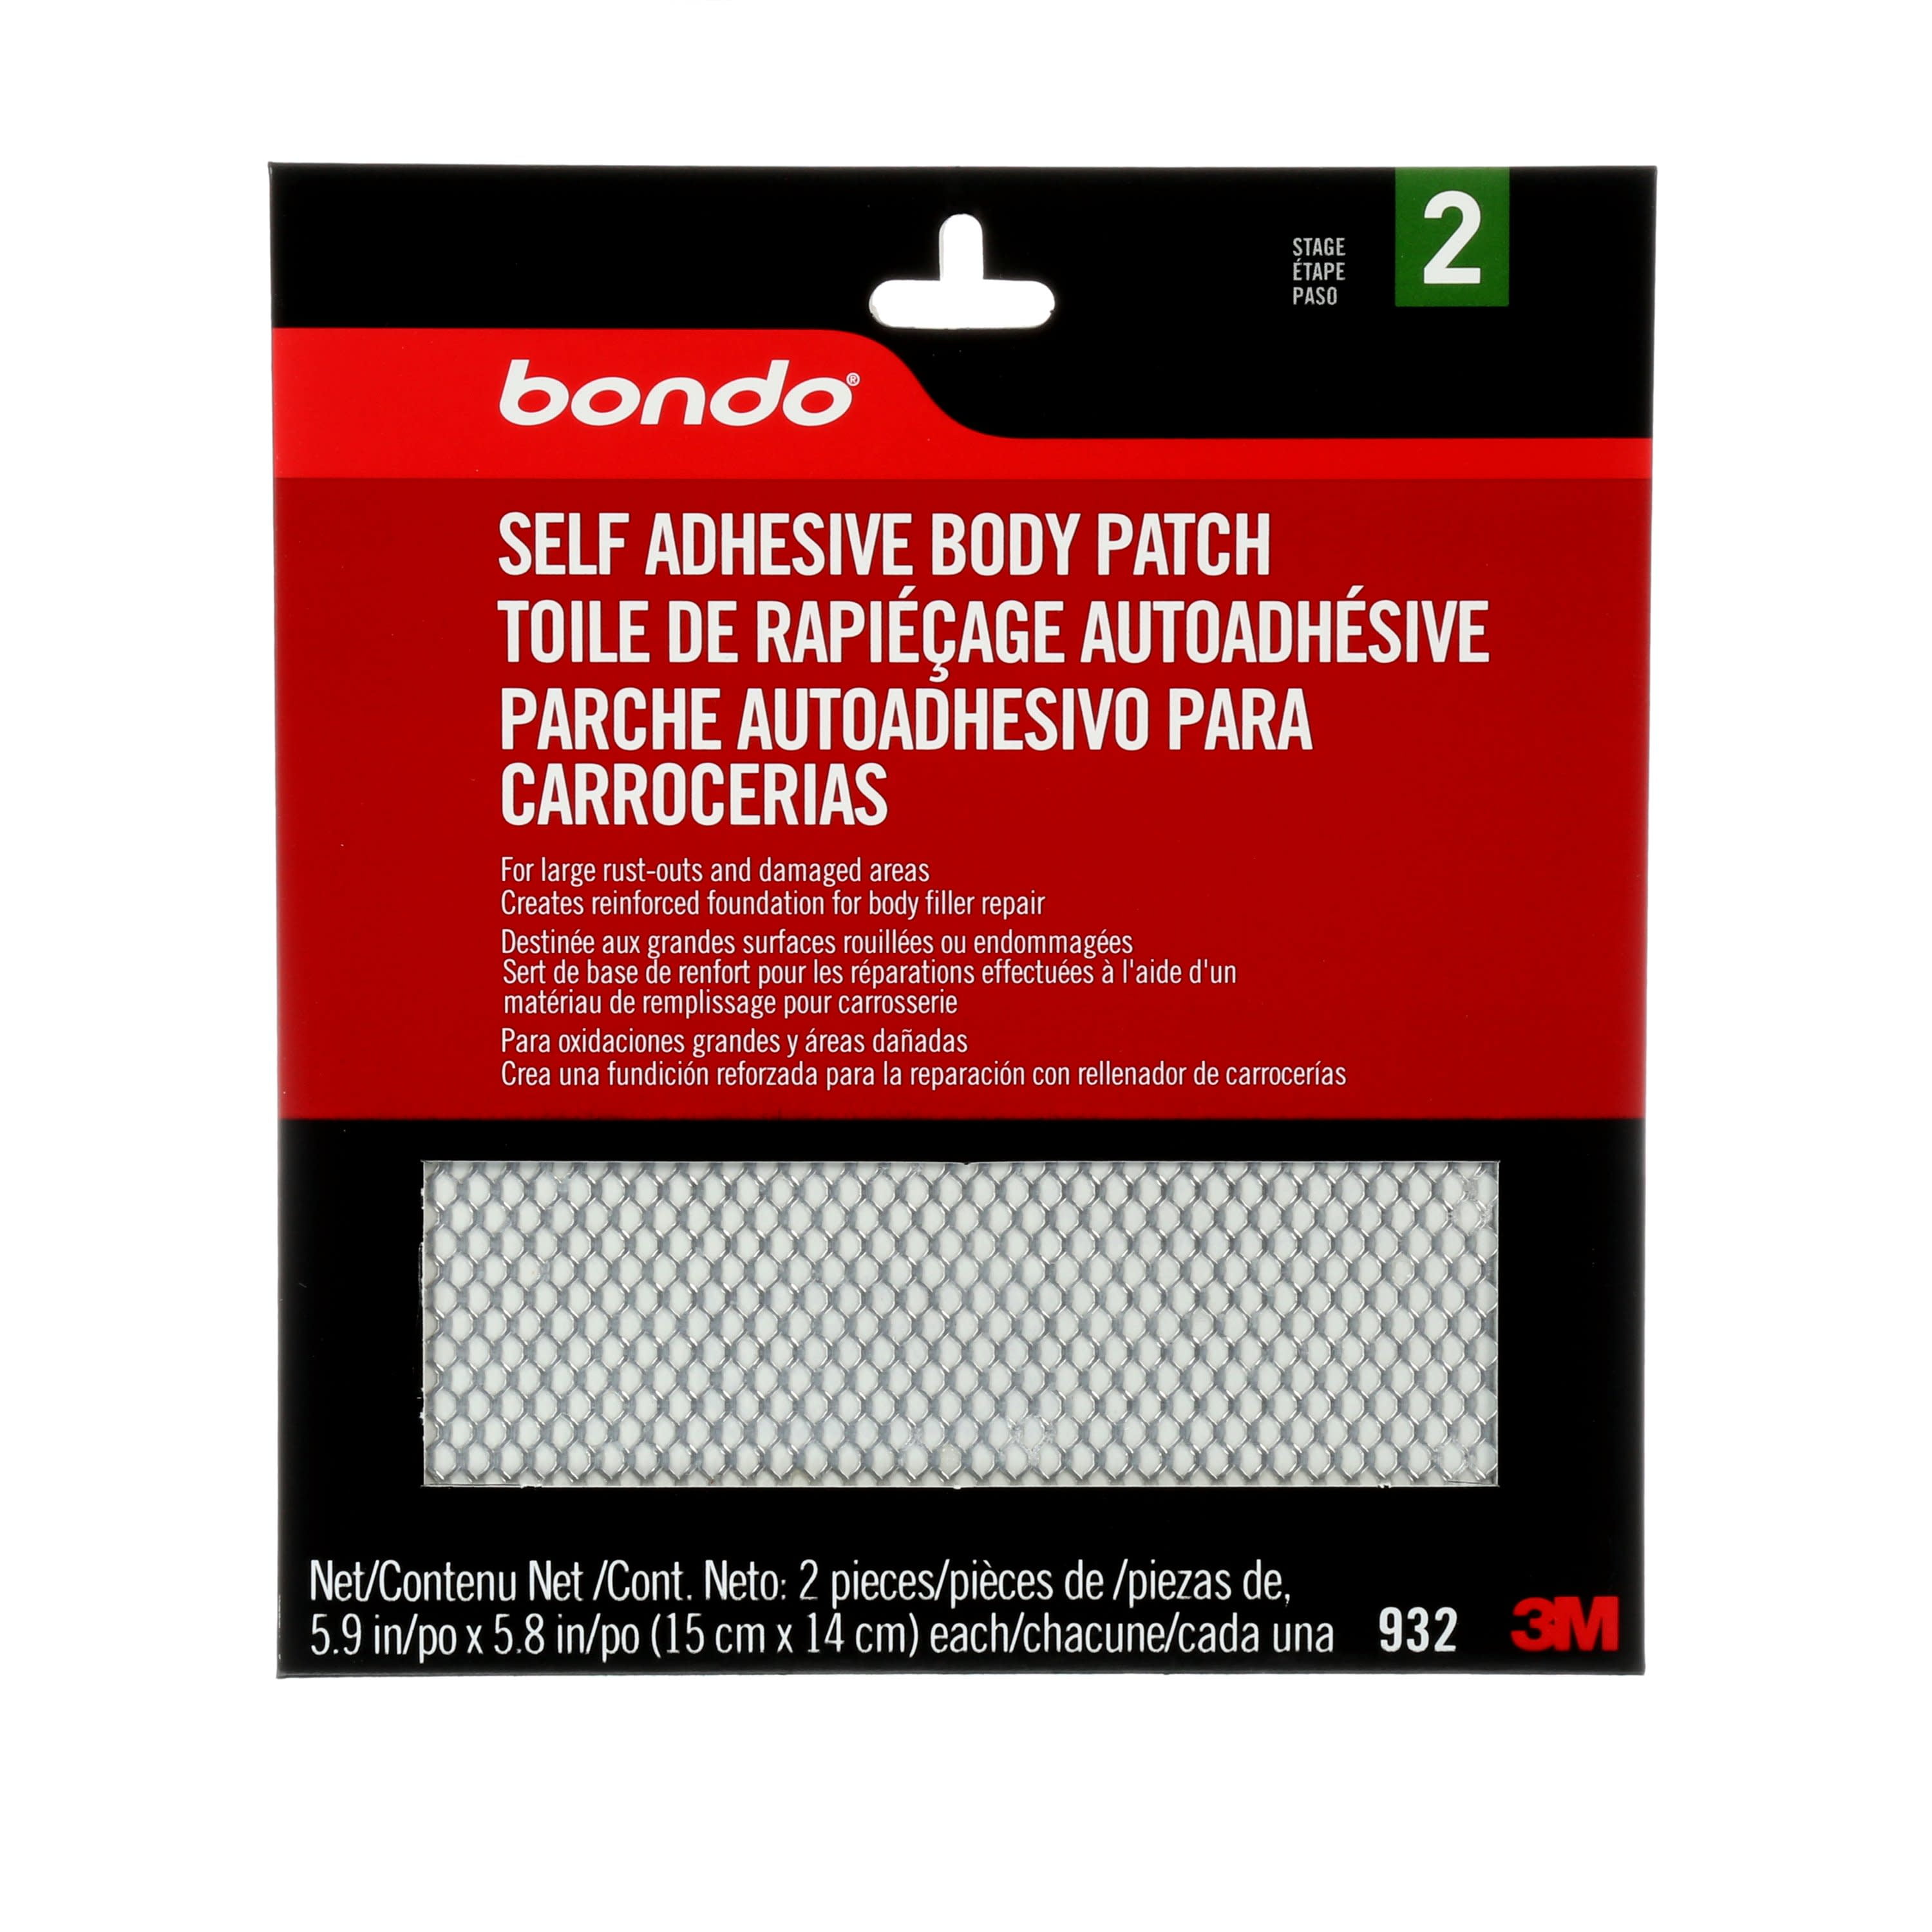 Bondo 932 Self Adhesive Body Patch